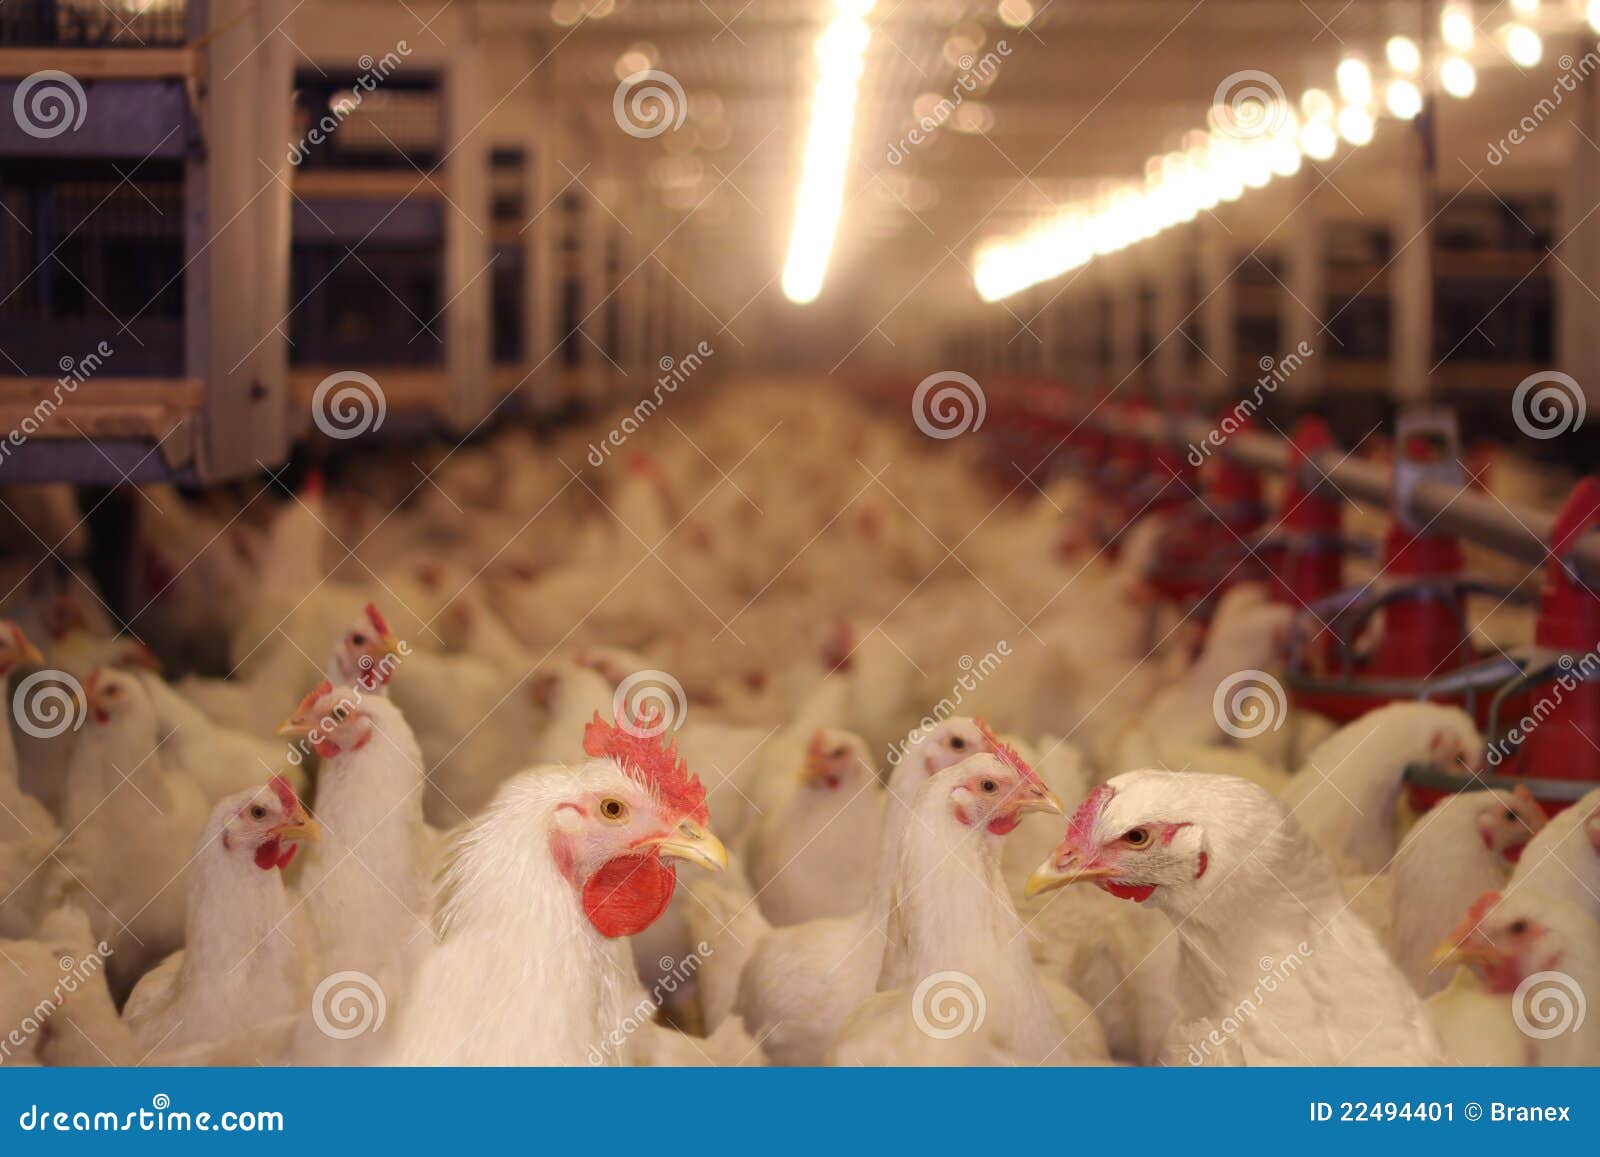 chicken farm, poultry